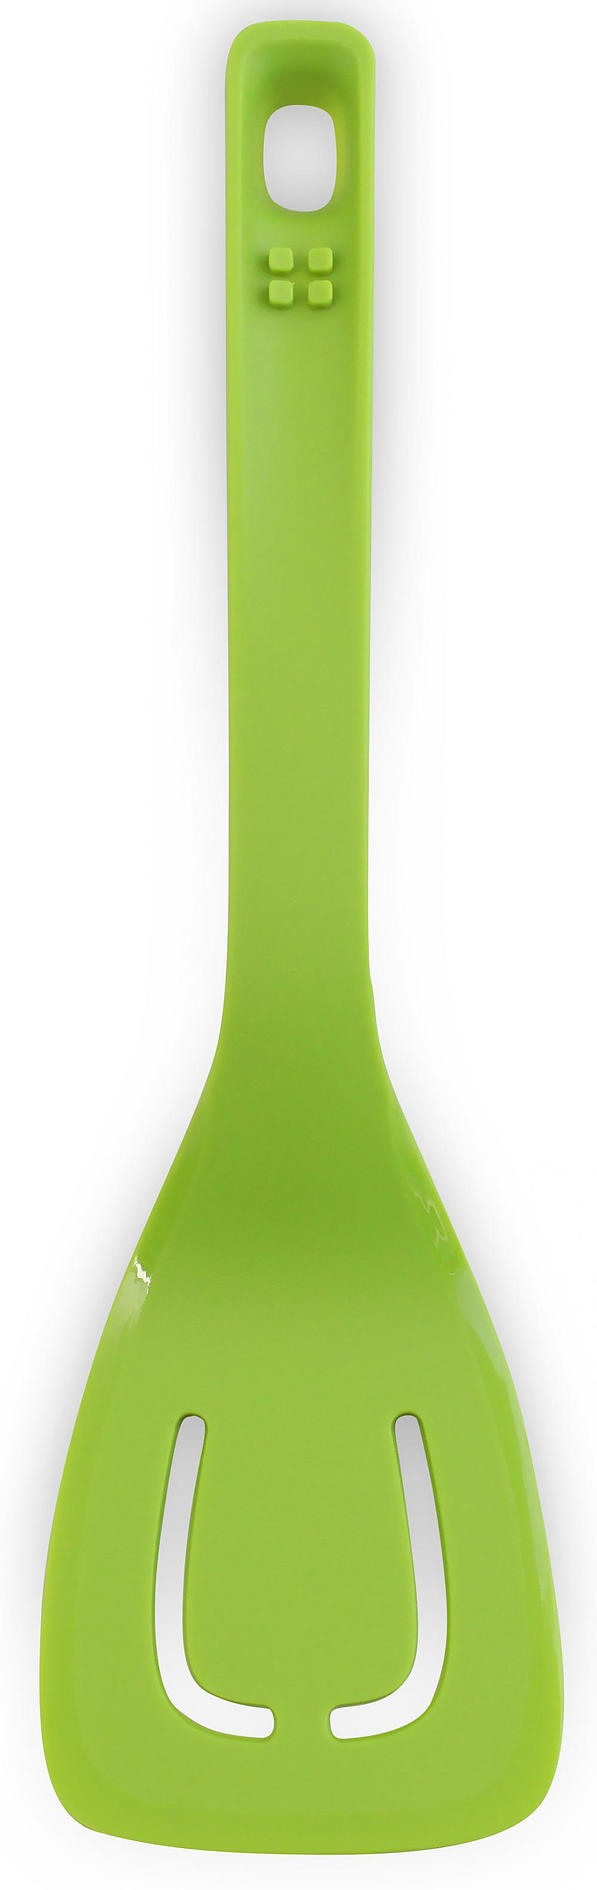 VIALLI DESIGN Colori Tasty zielona 32 cm - łopatka kuchenna ażurowa nylonowa